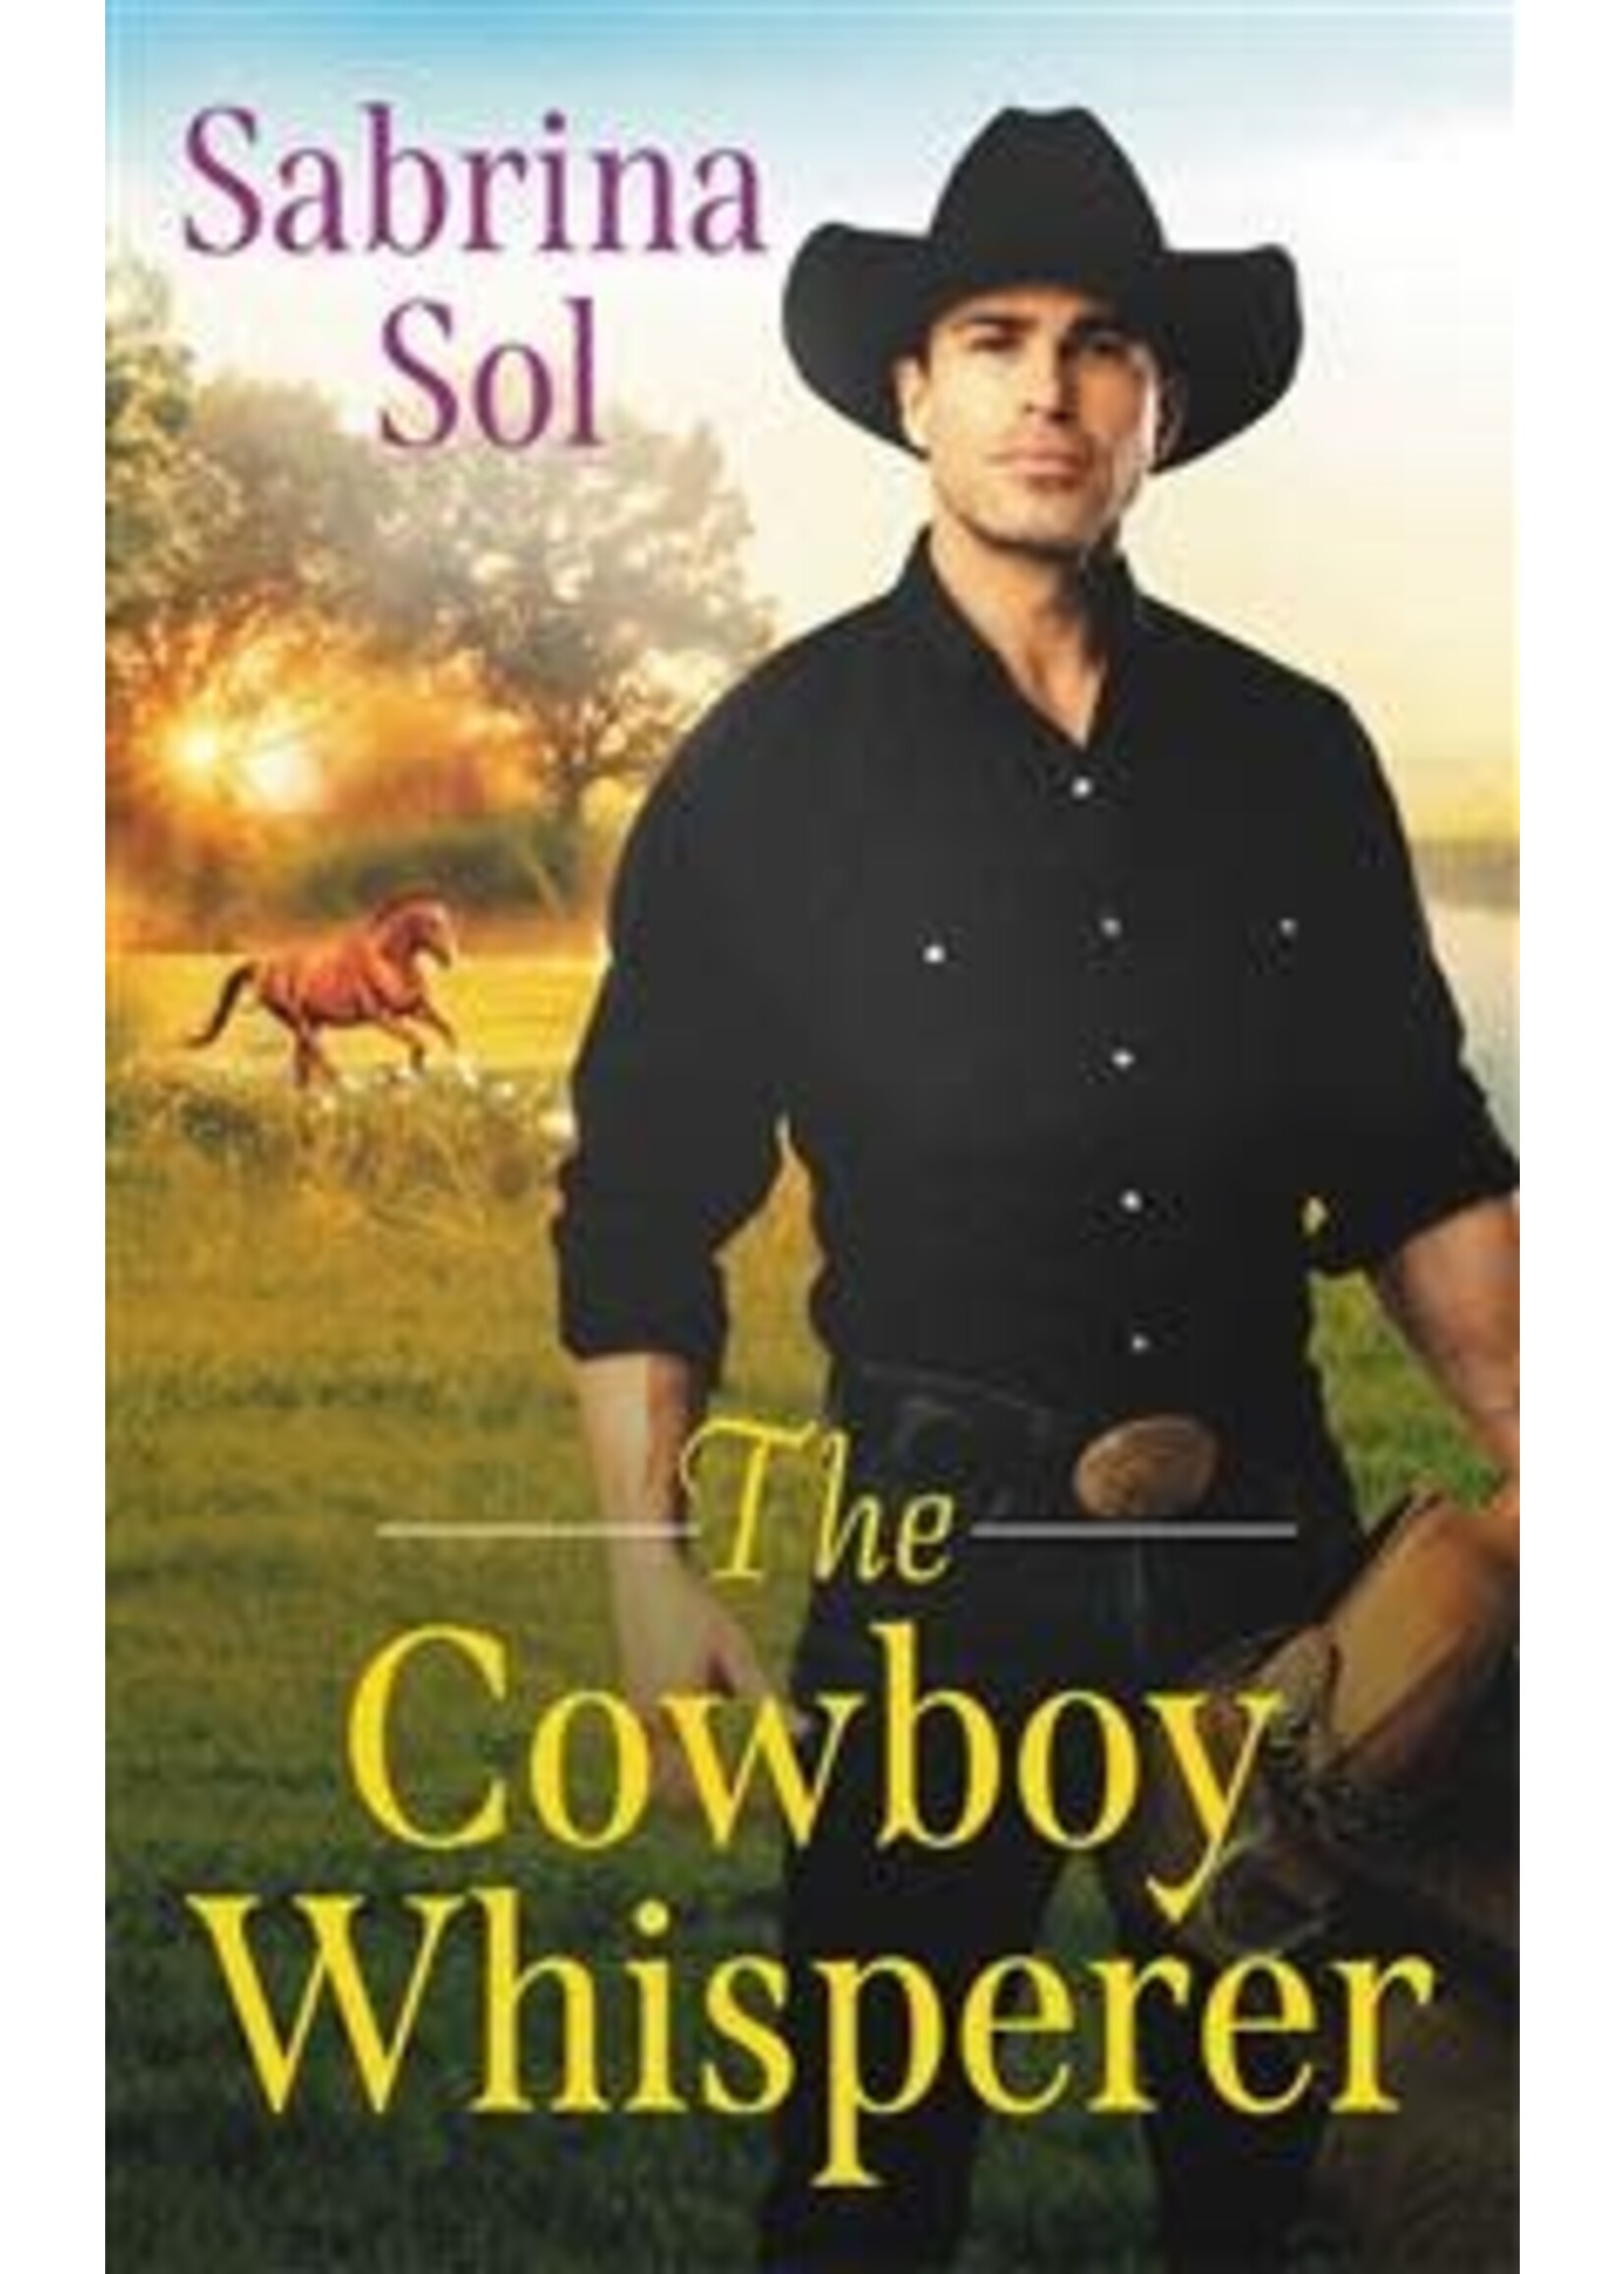 The Cowboy Whisperer by Sabrina Sol